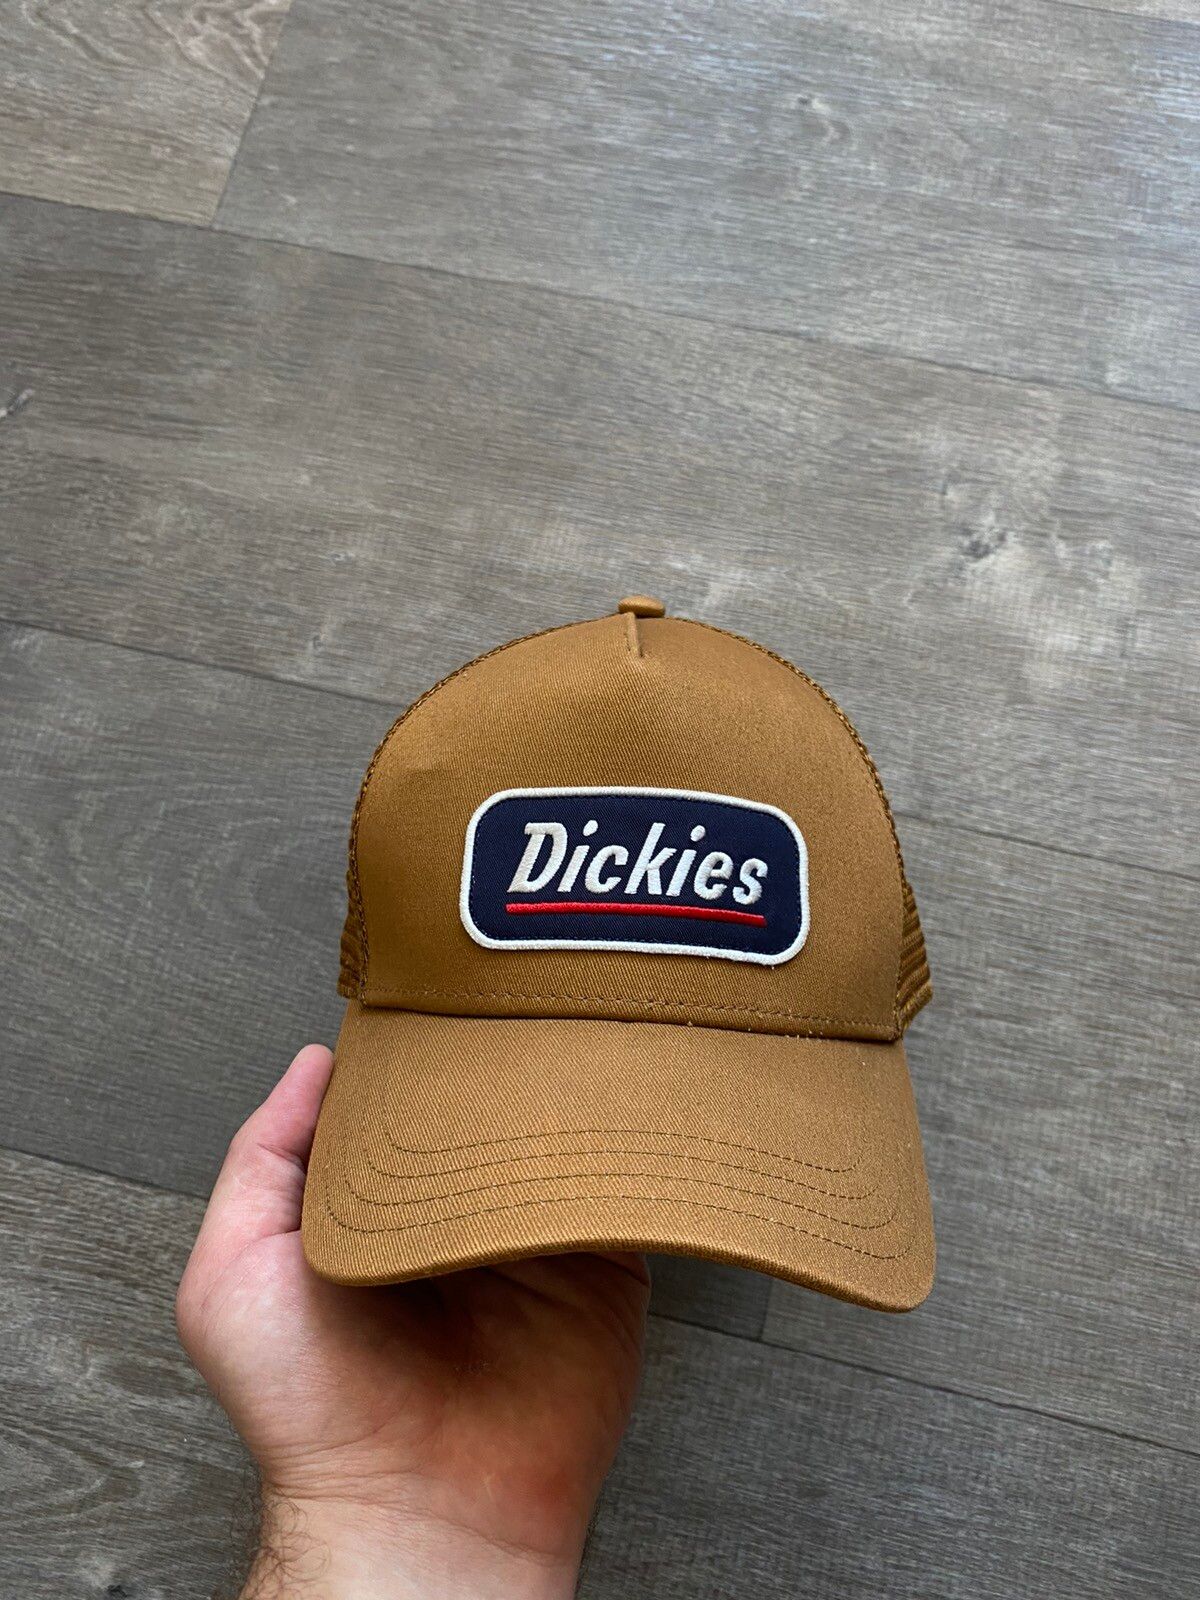 Dickies Dickies trucker logo cap | Grailed